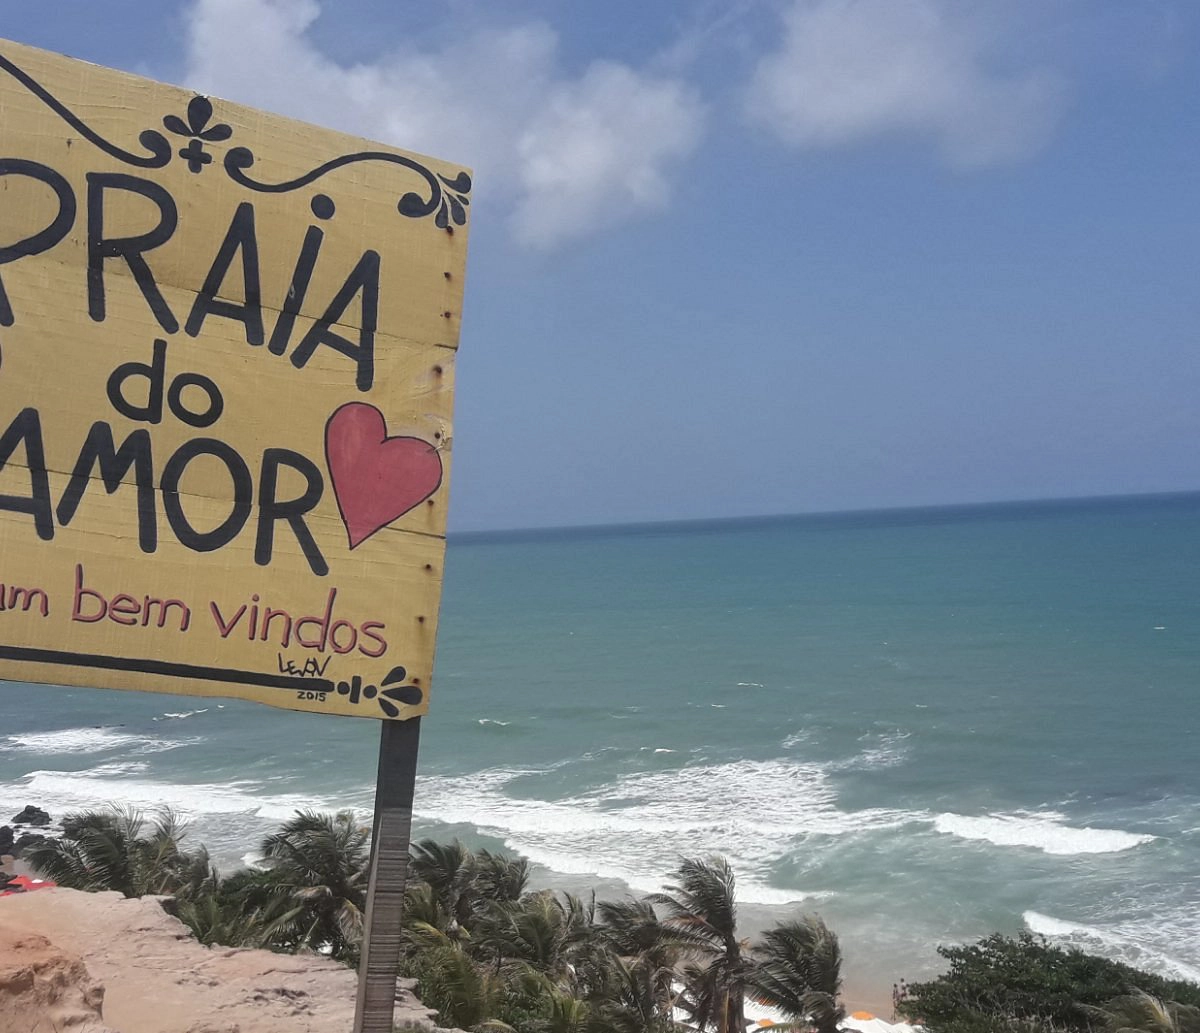  Praia do Amor  strand - Brazil